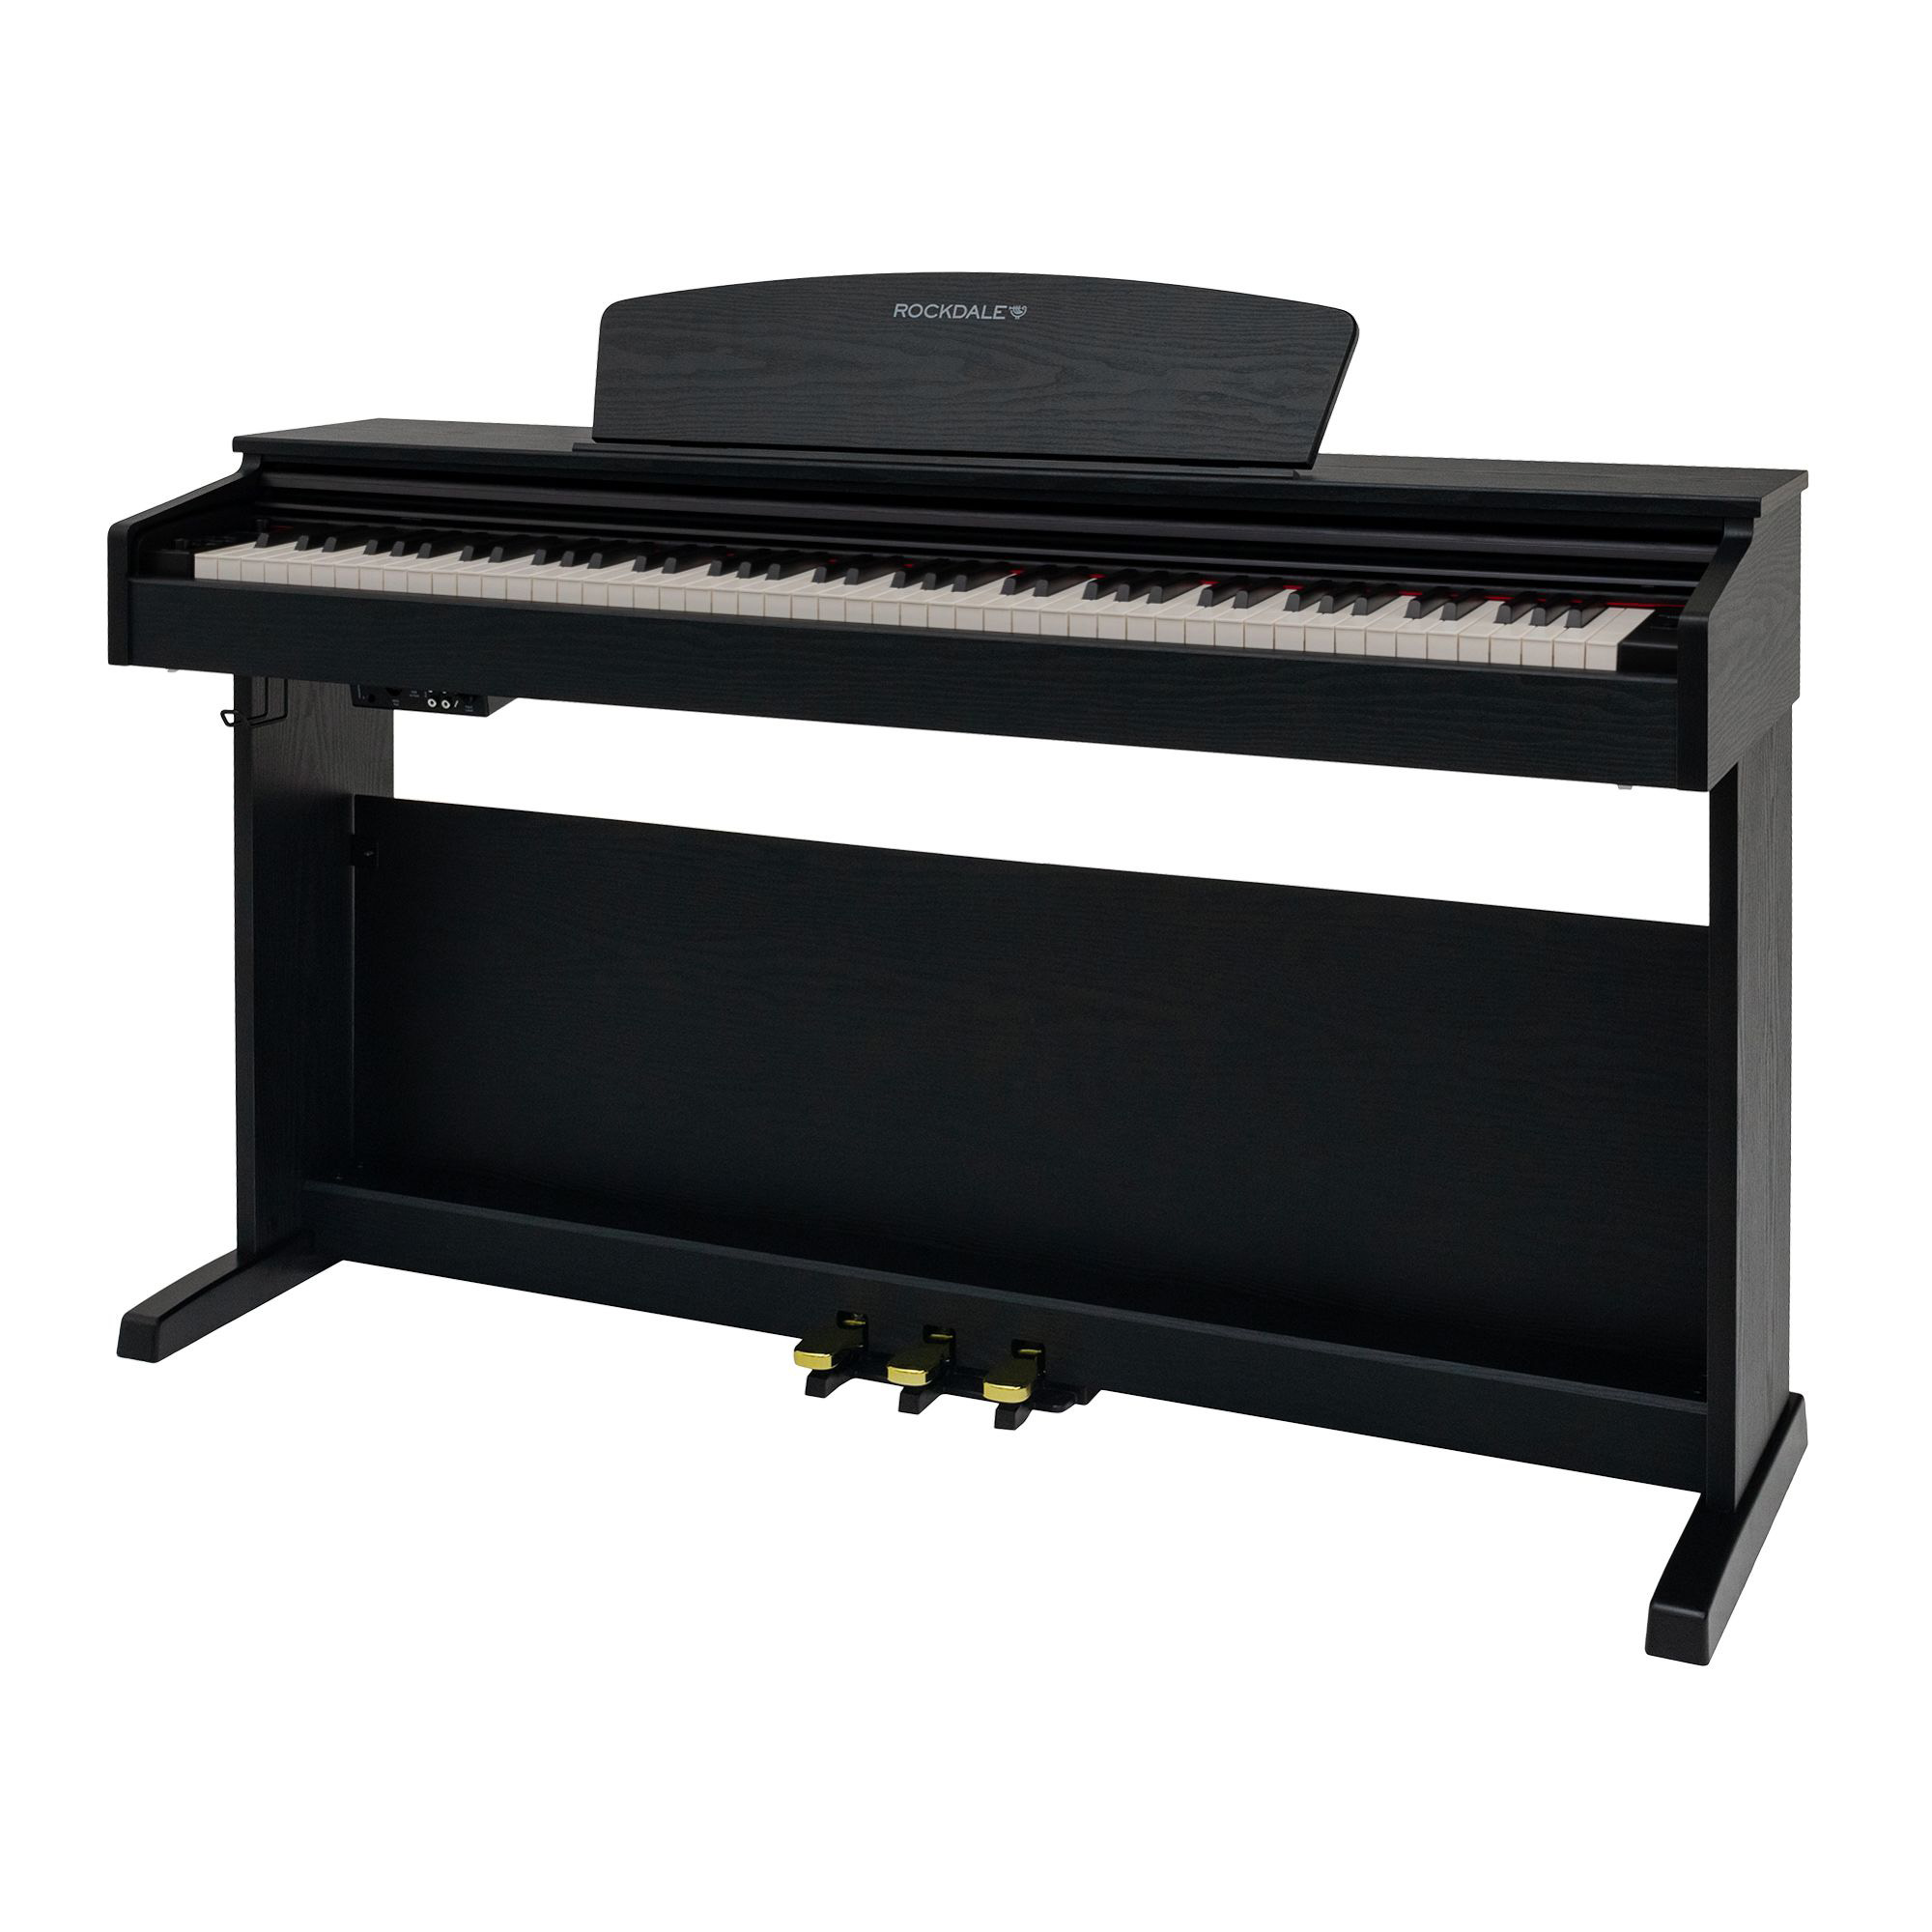 Rockdale Etude 128 Graded Black Цифровые пианино